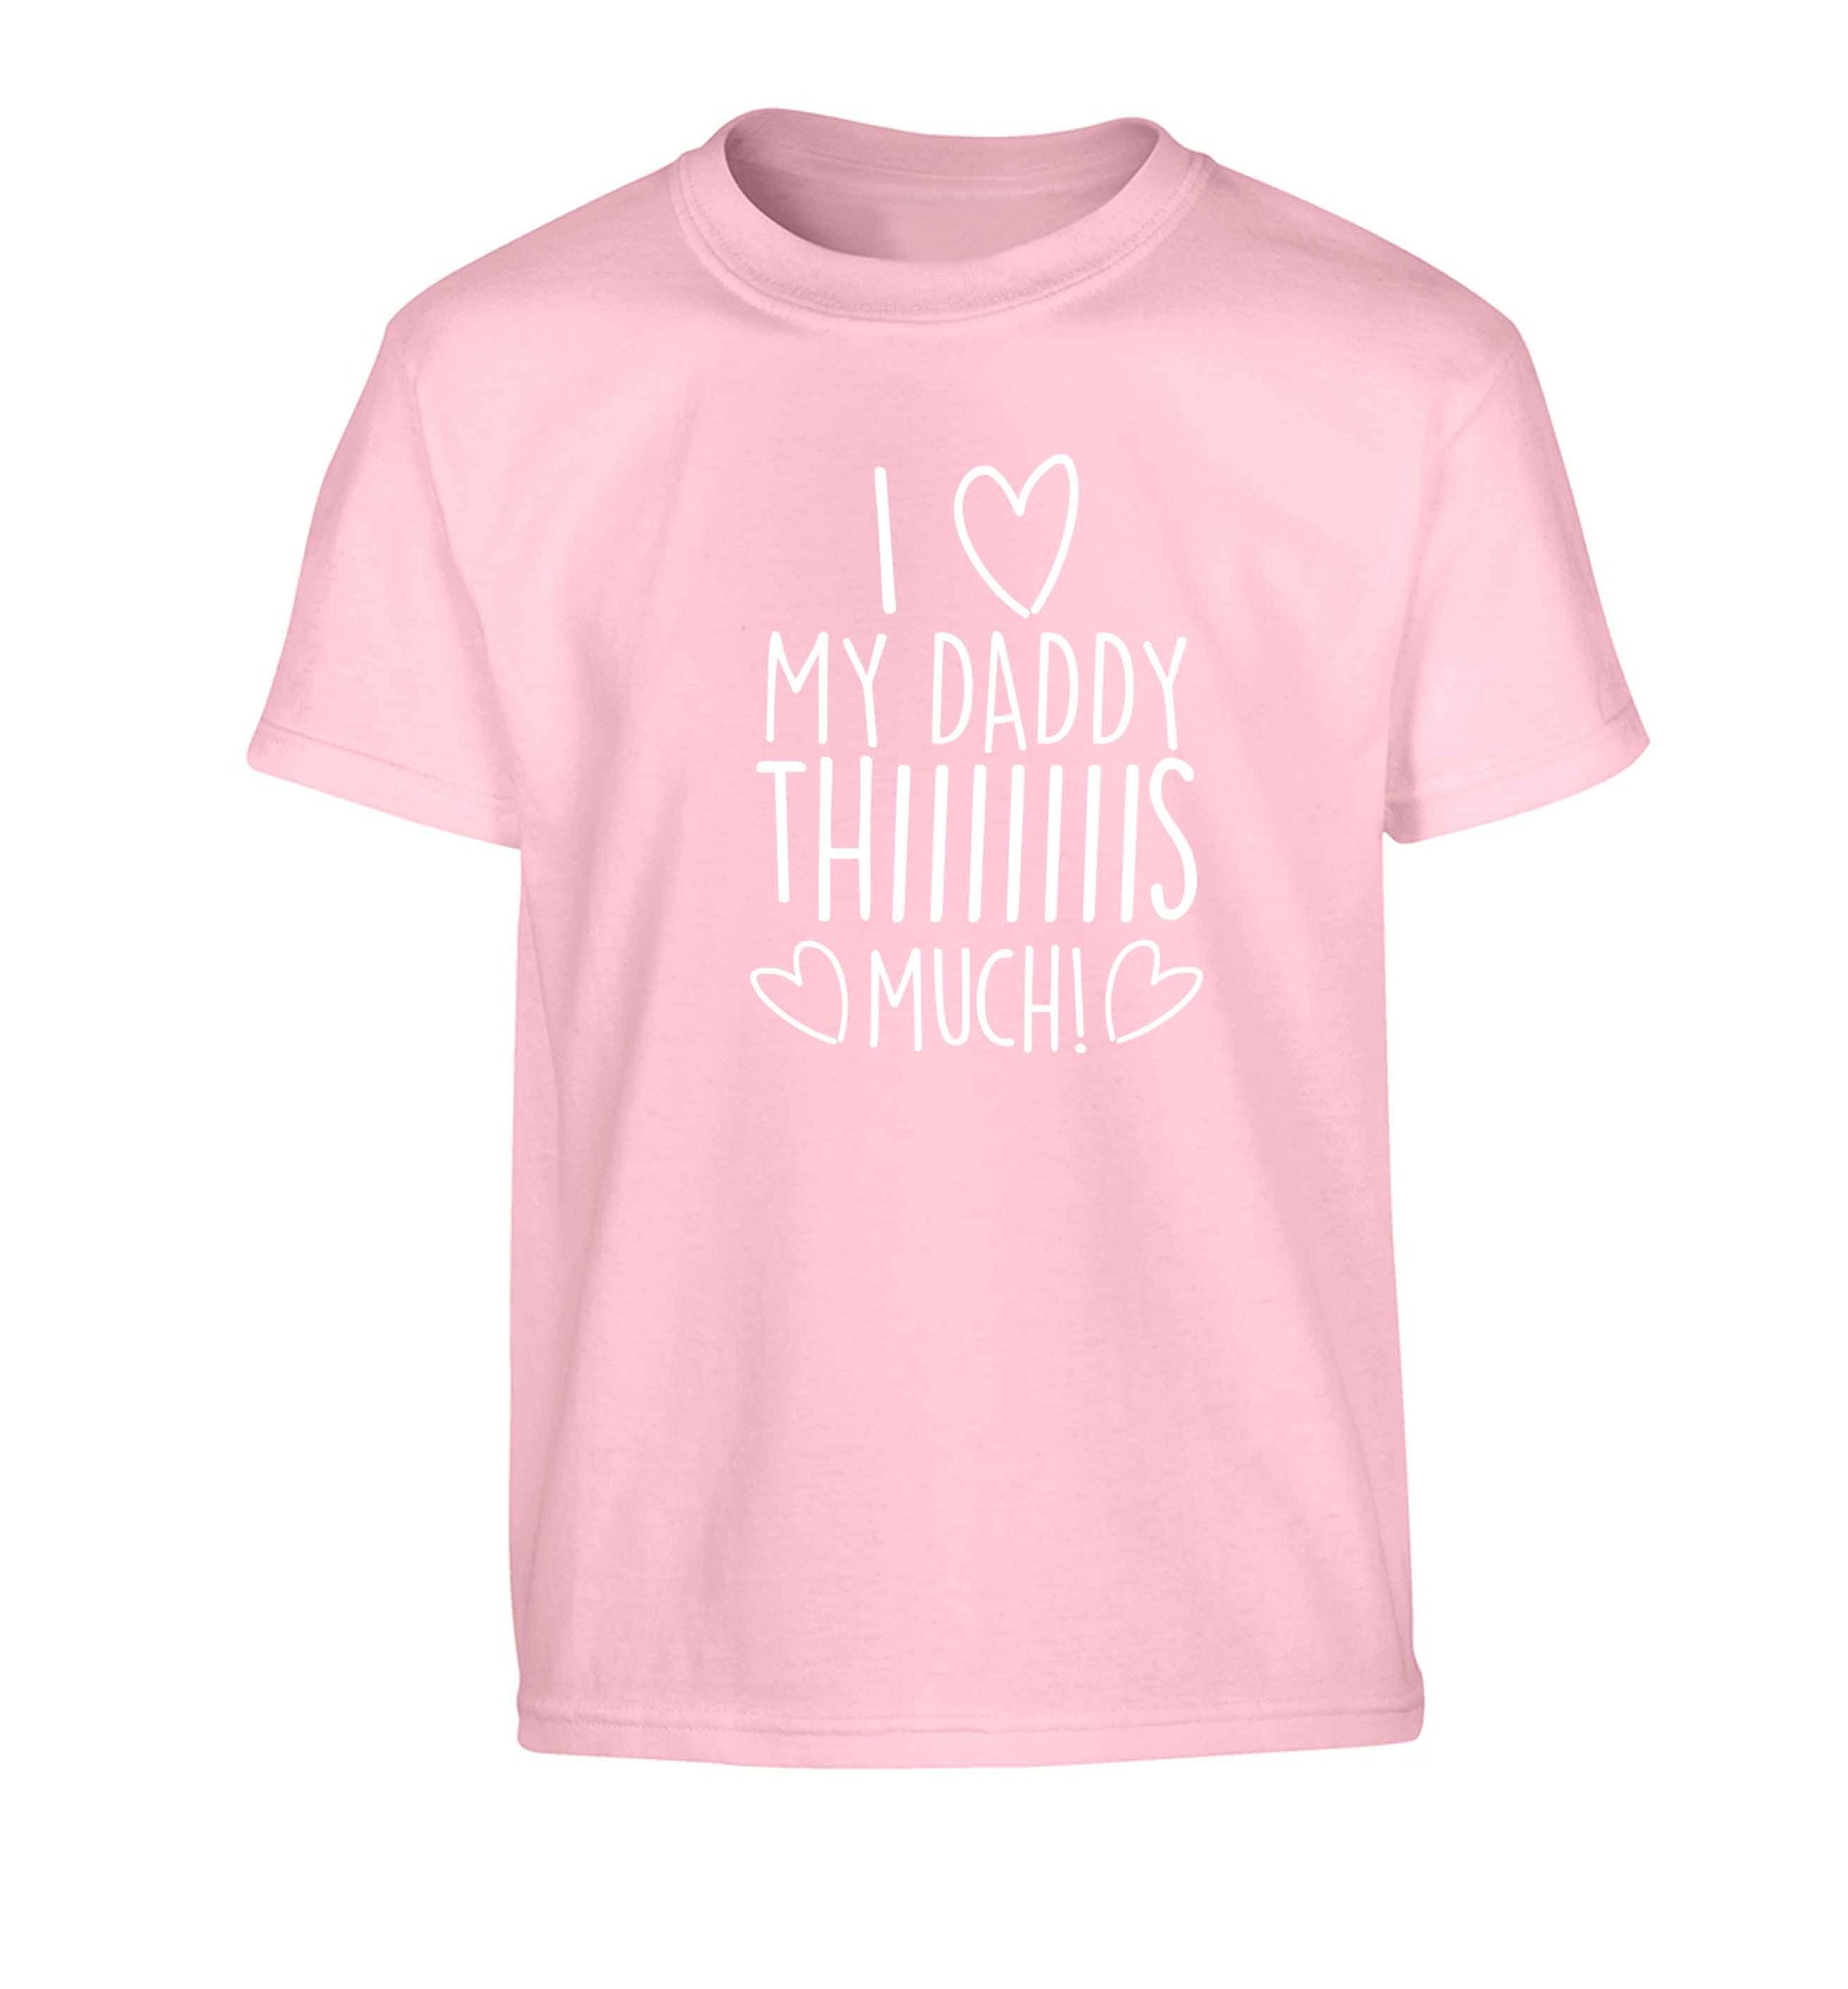 I love my daddy thiiiiis much! Children's light pink Tshirt 12-13 Years